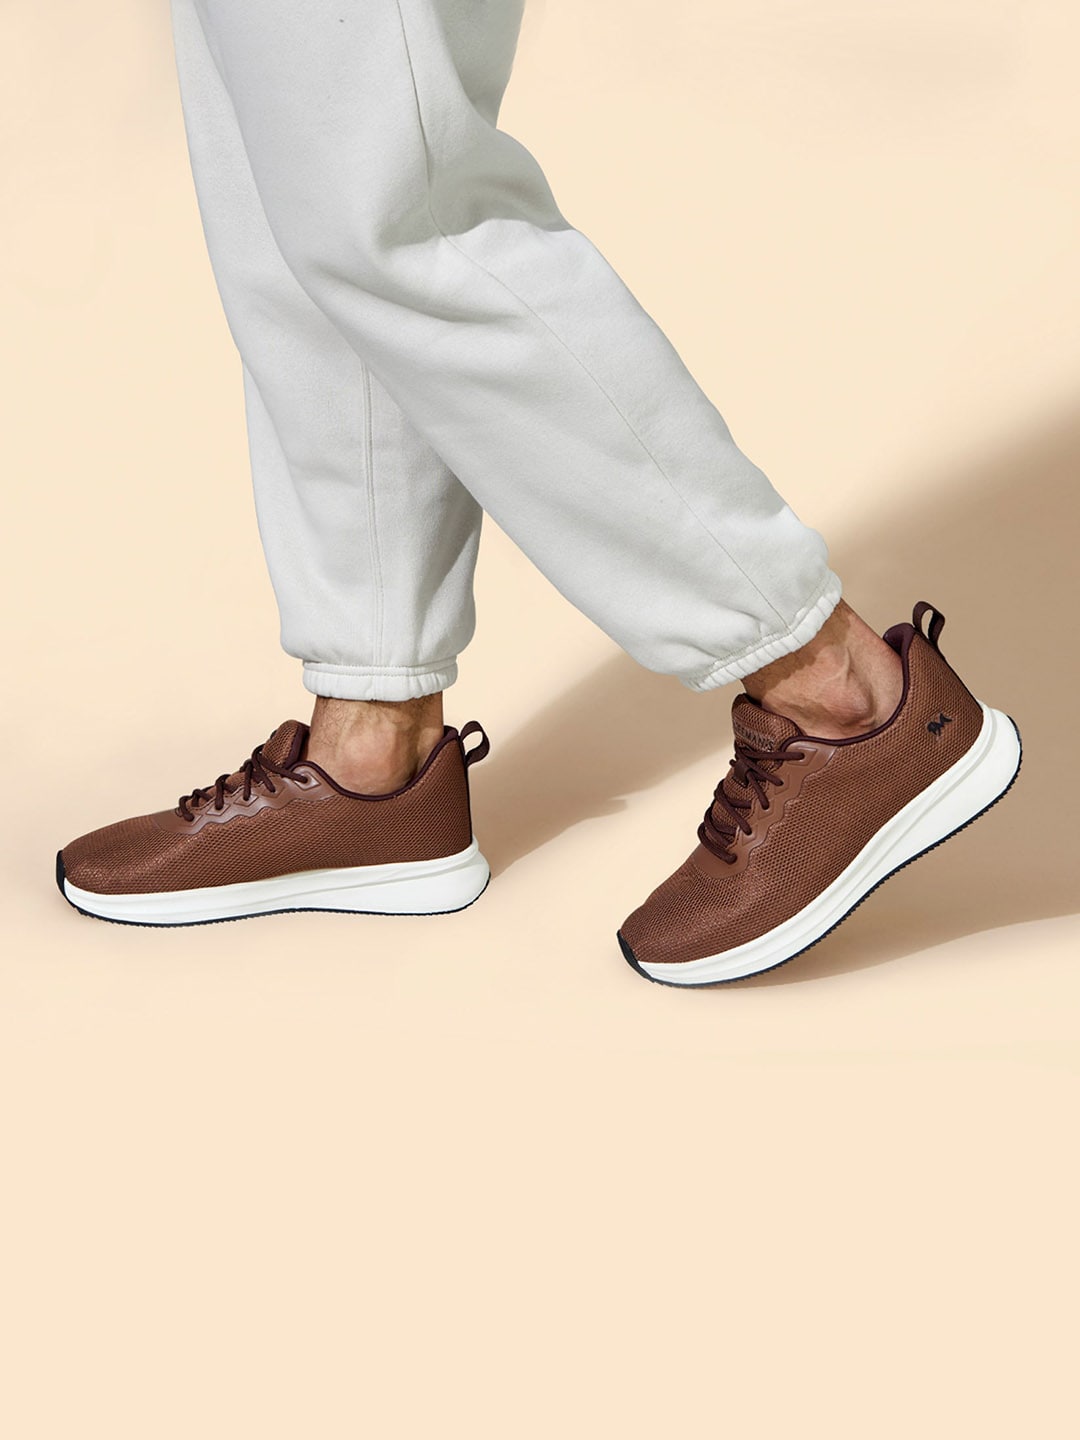 NEEMANS Men Comfort Insole Contrast Sole Lace-Ups Sneakers